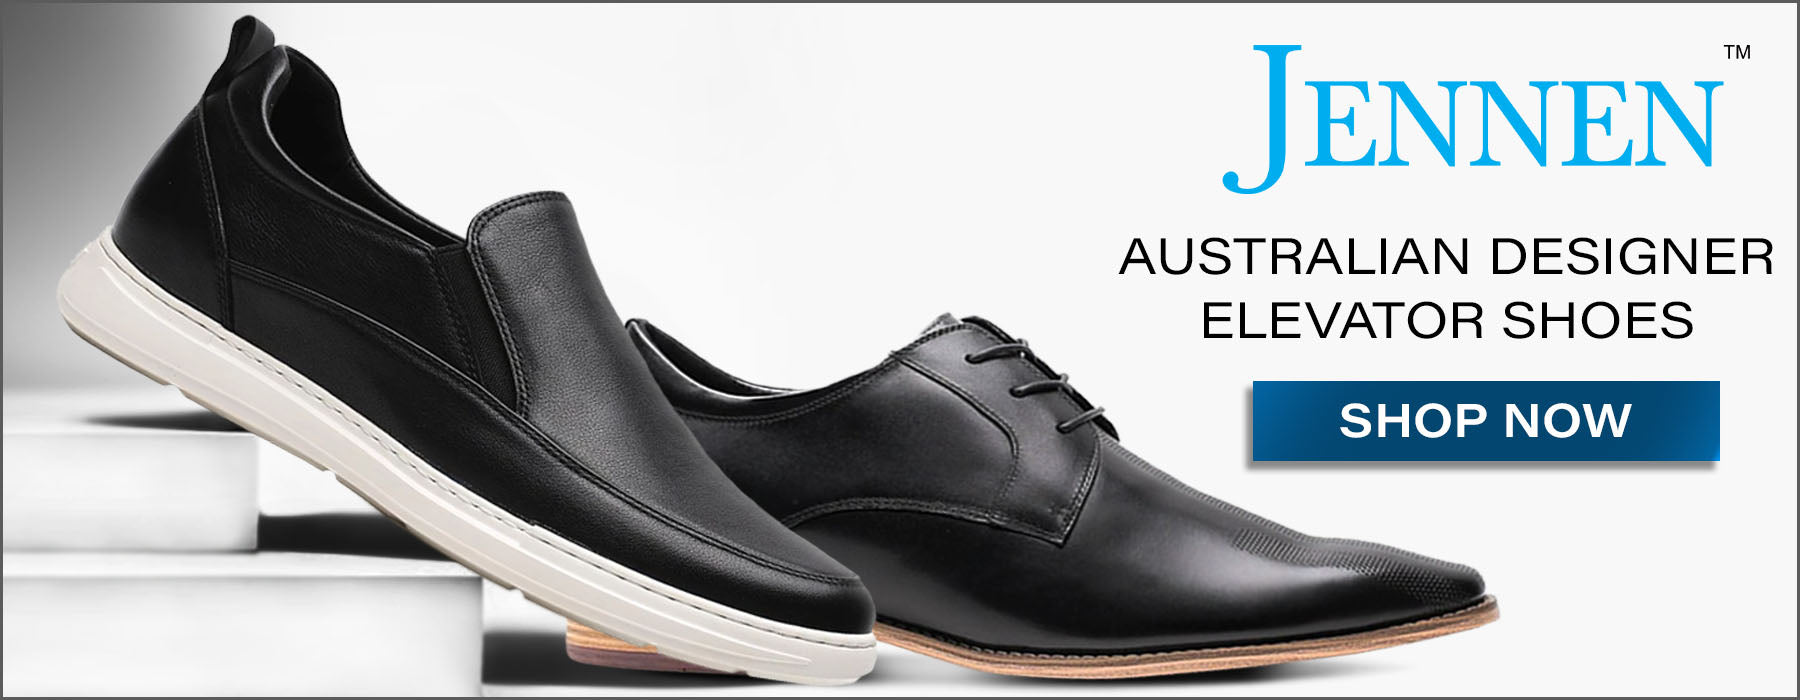 JENNEN shoes | Australia Elevator Shoes